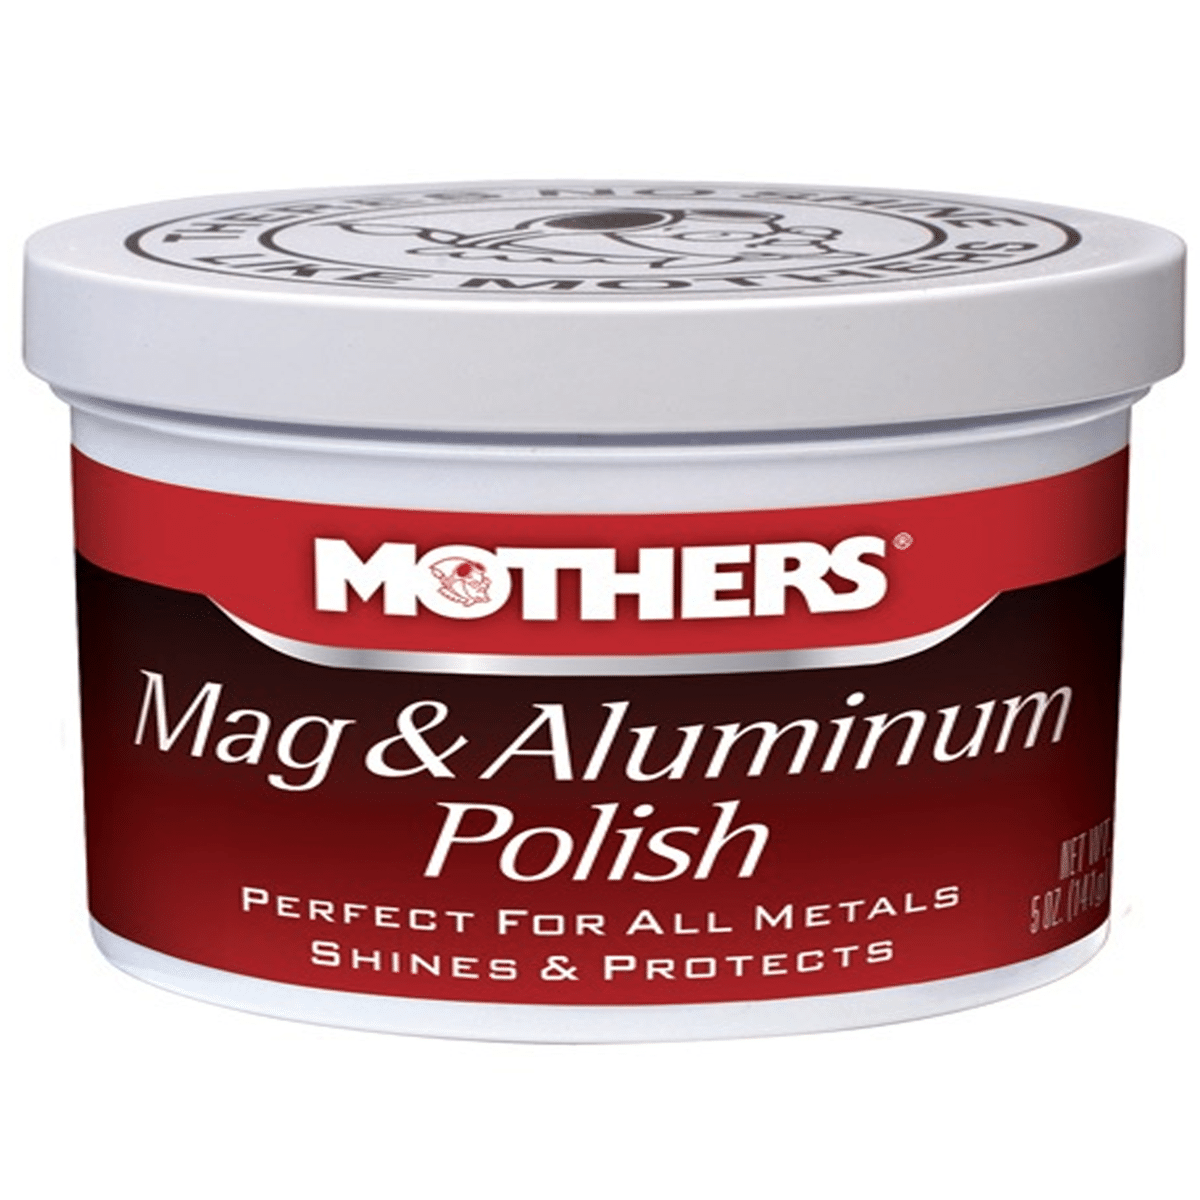 MOTHERS Mag & Aluminum Polish 283g Pasta do Polerowania Metalu